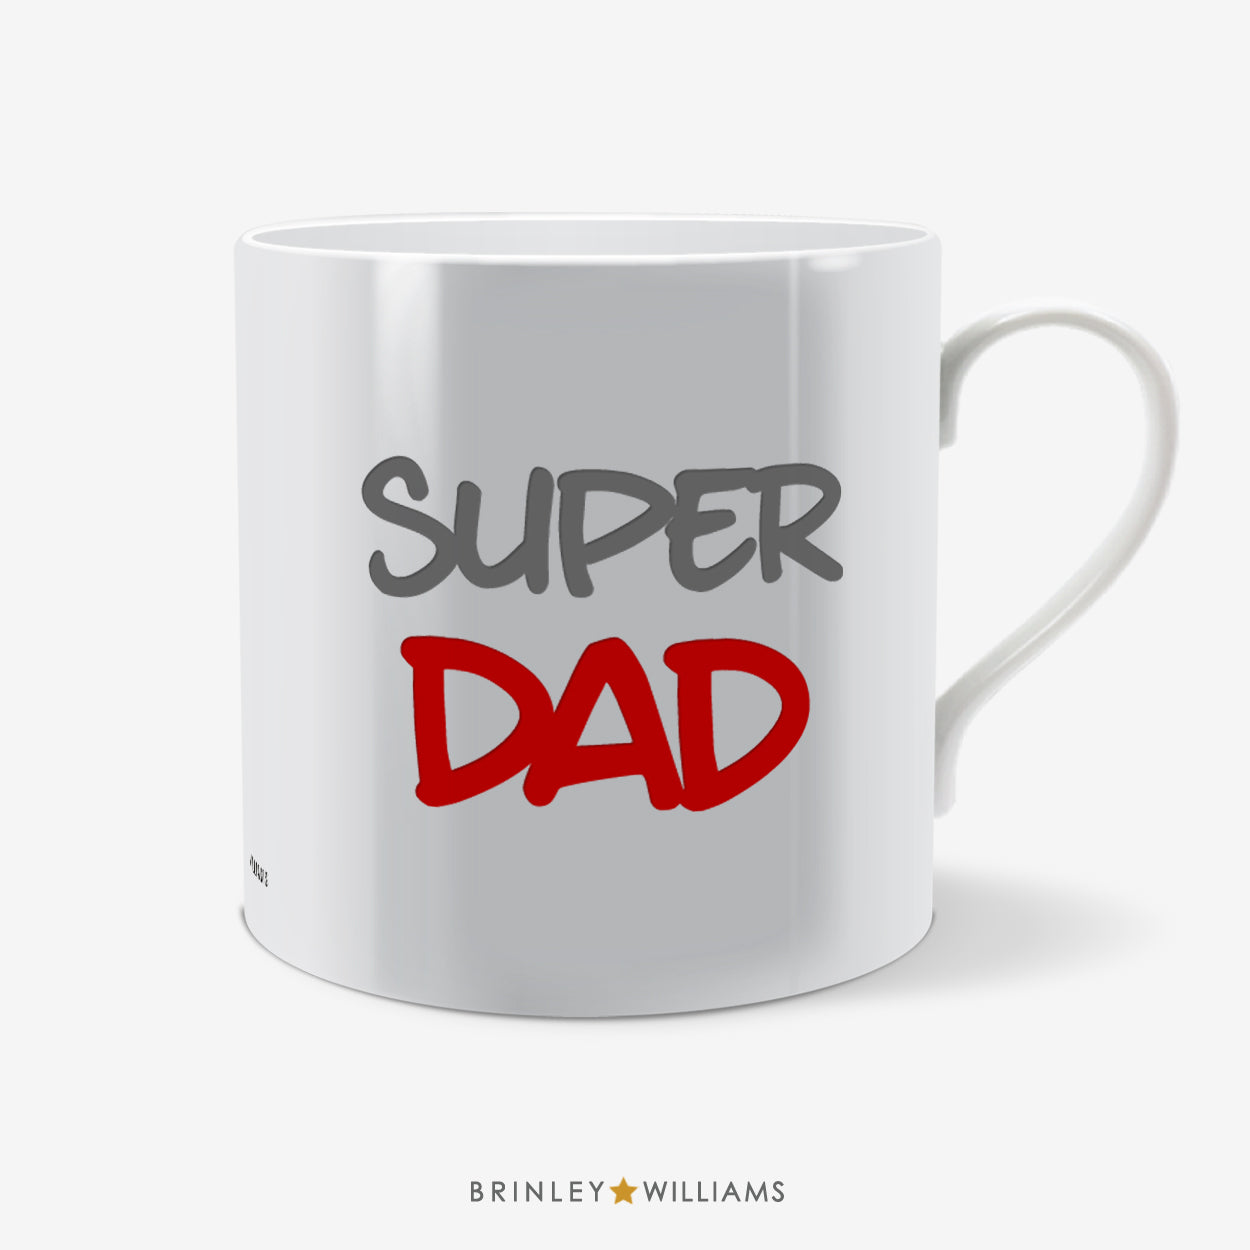 Super Dad Fun Mug - Red